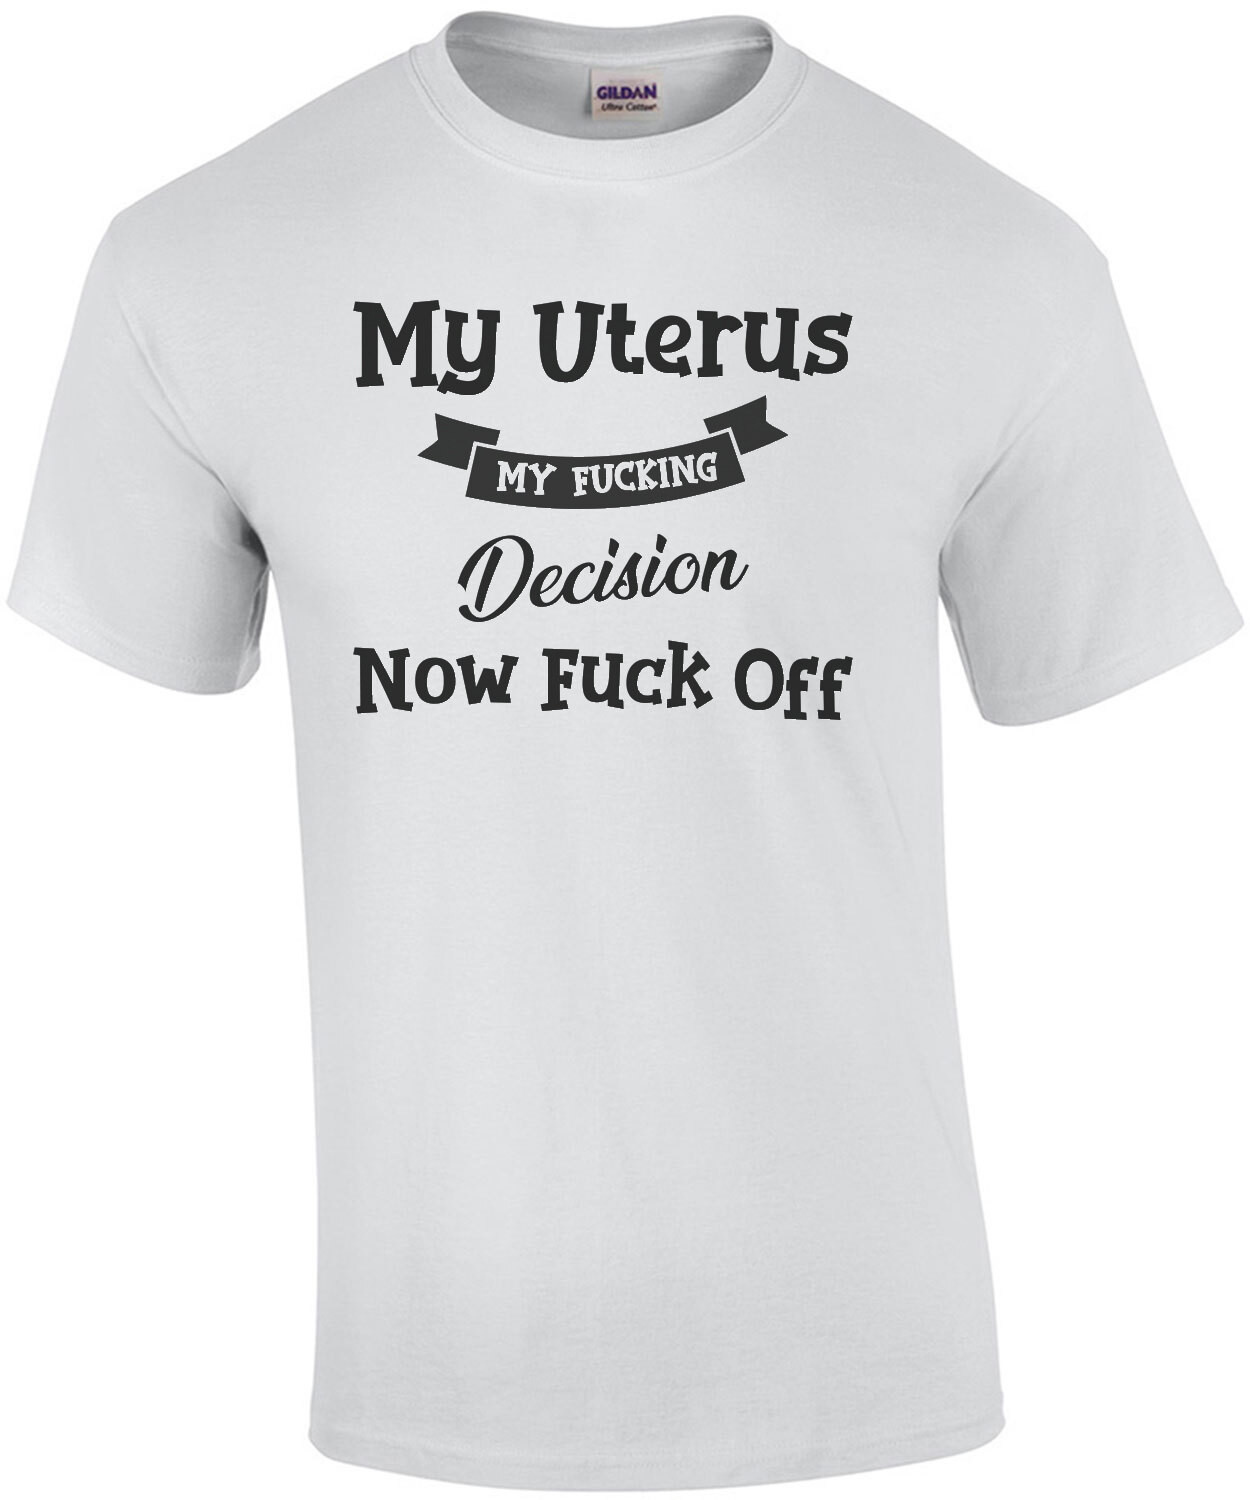 My uterus - my fucking decision - now fuck off - pro-choice t-shirt